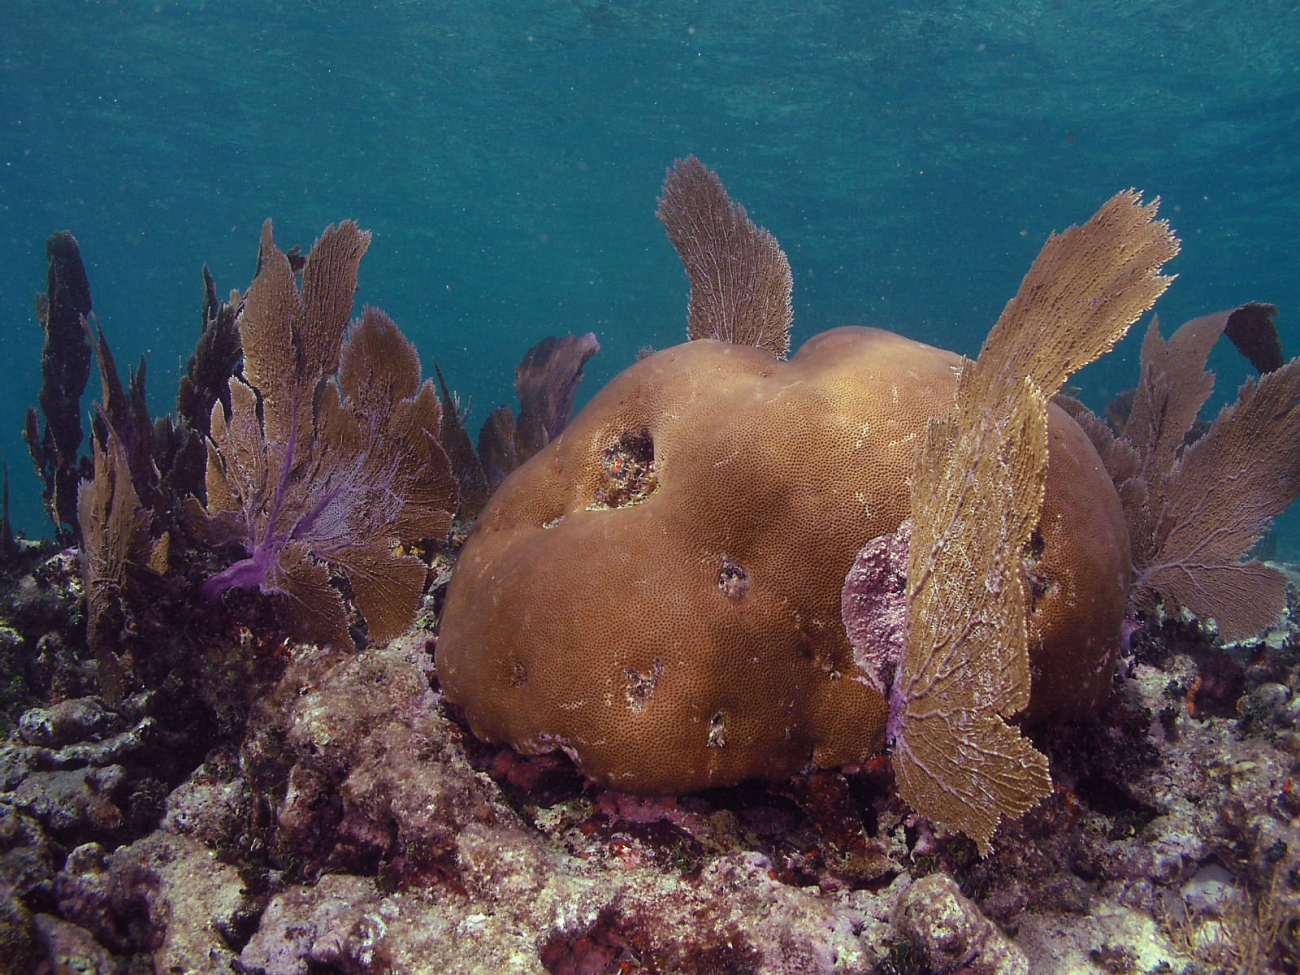 Massive starlet coral (Siderastrea siderastrea) and sea fans